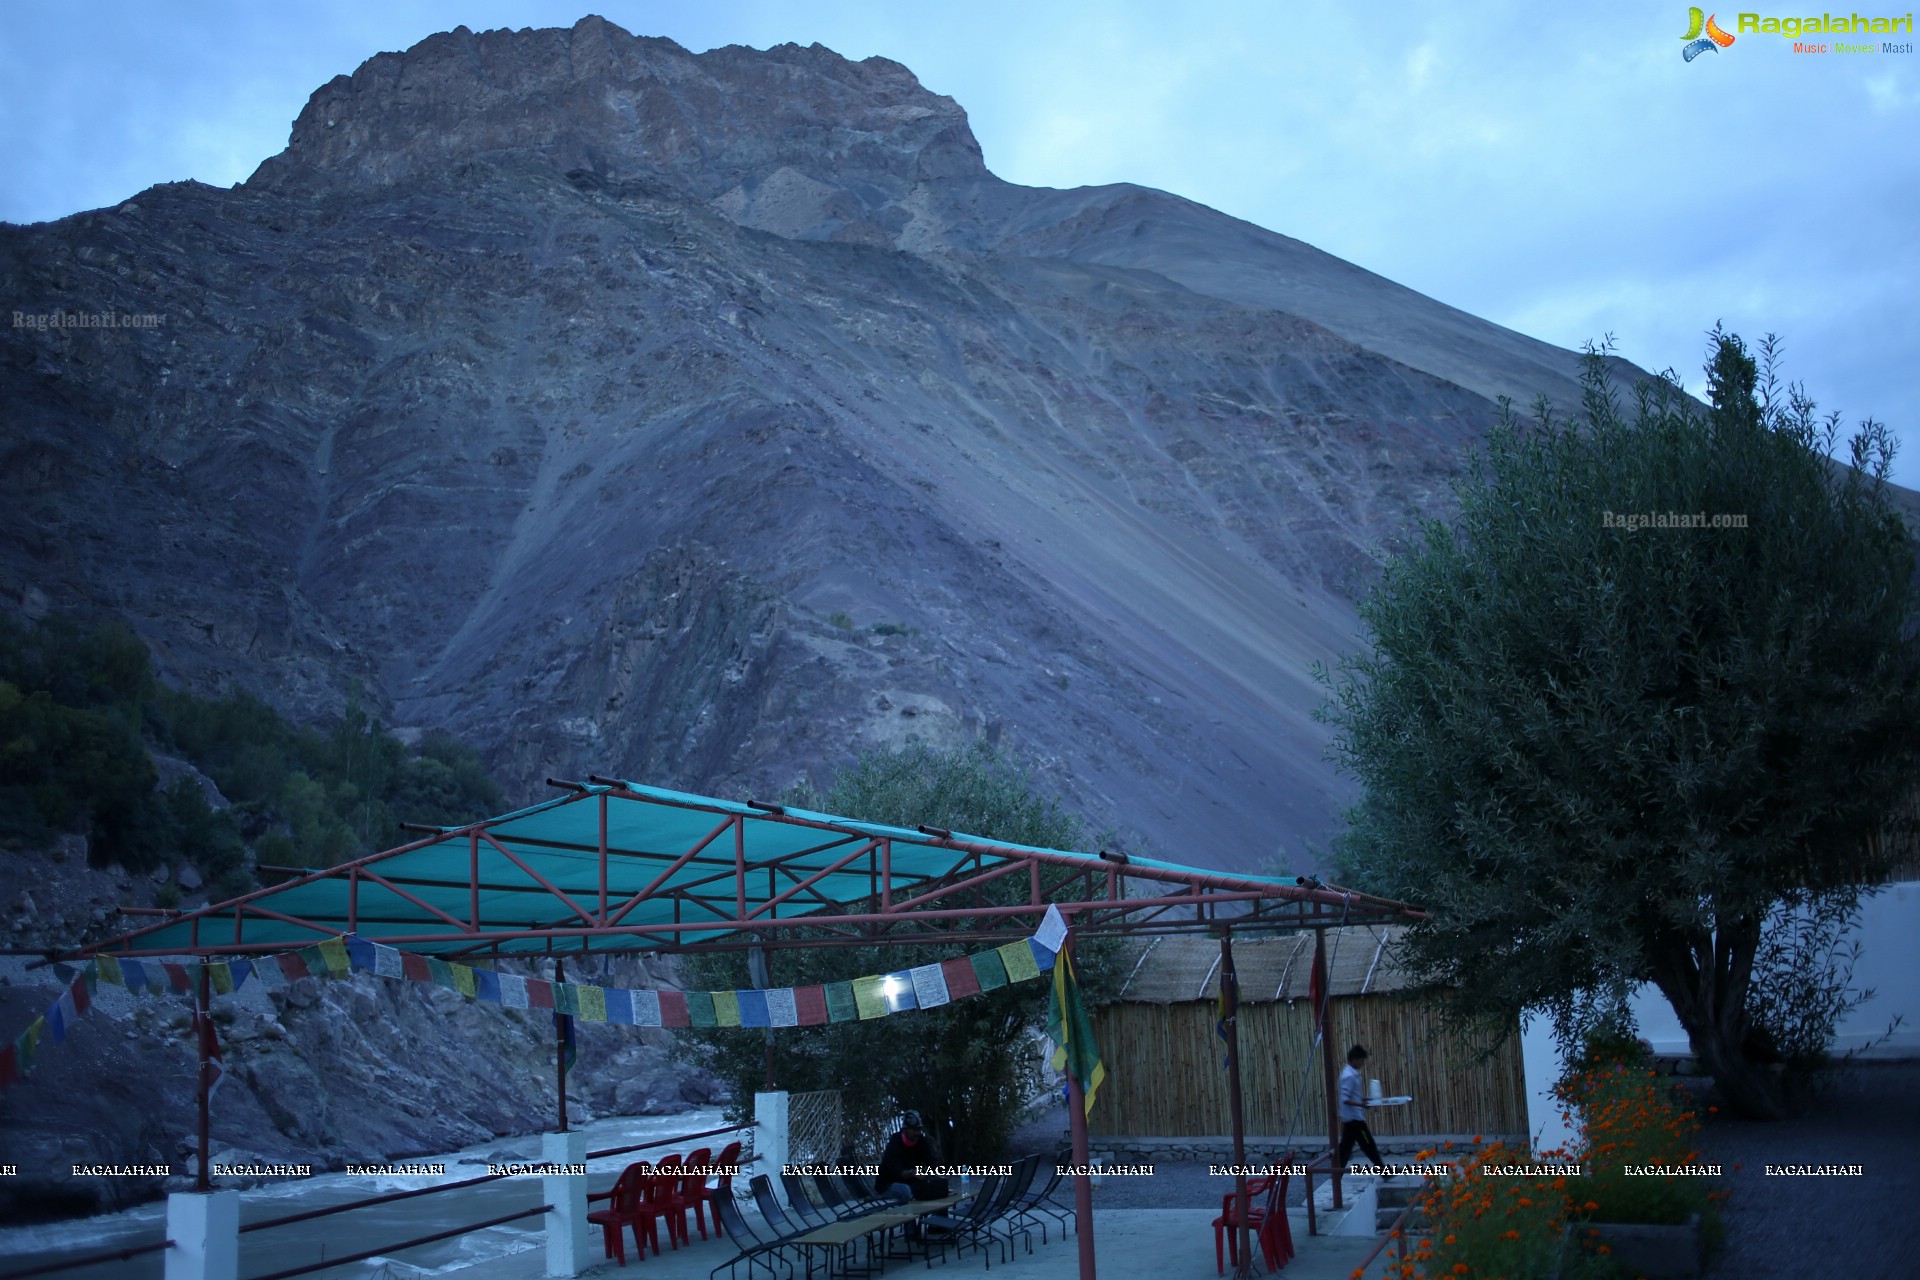 Moonland, Ladakh High Definition Photos